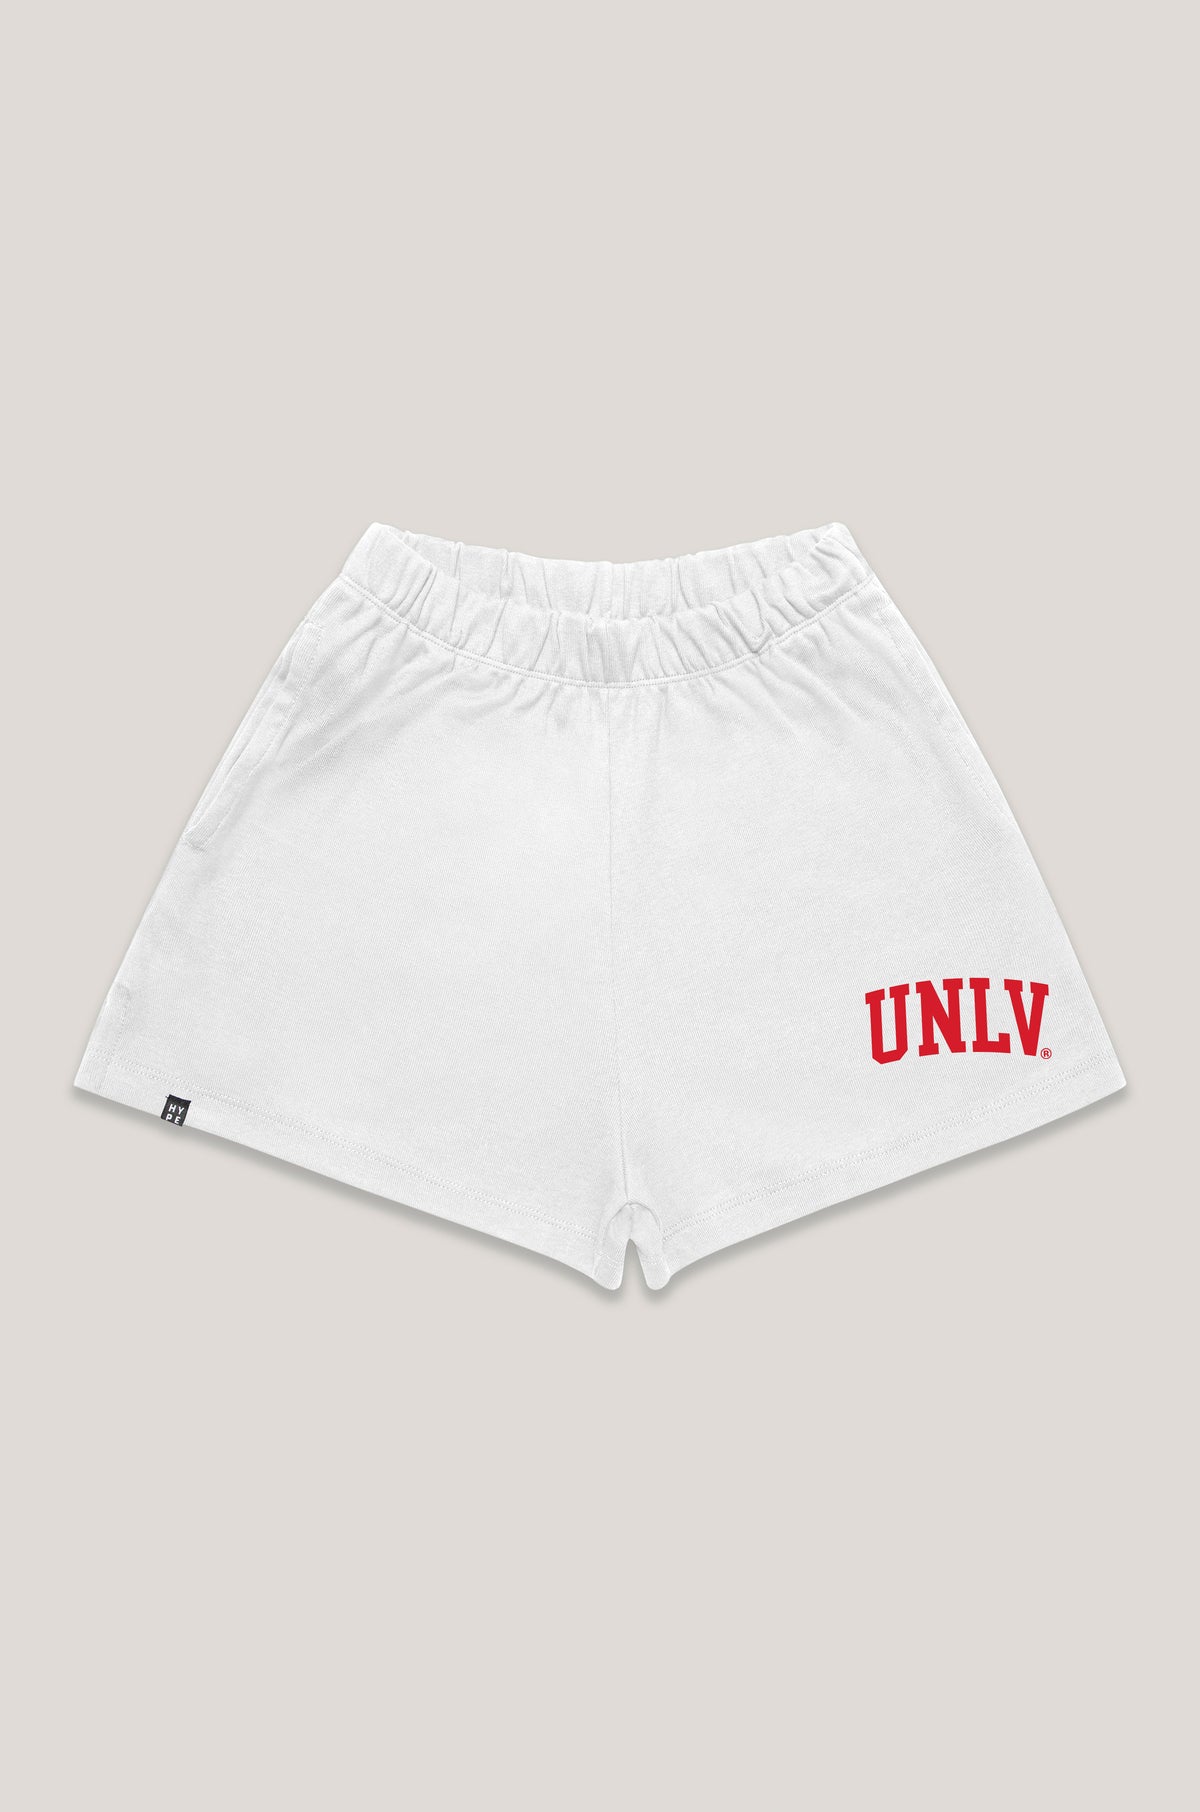 UNLV Track Shorts